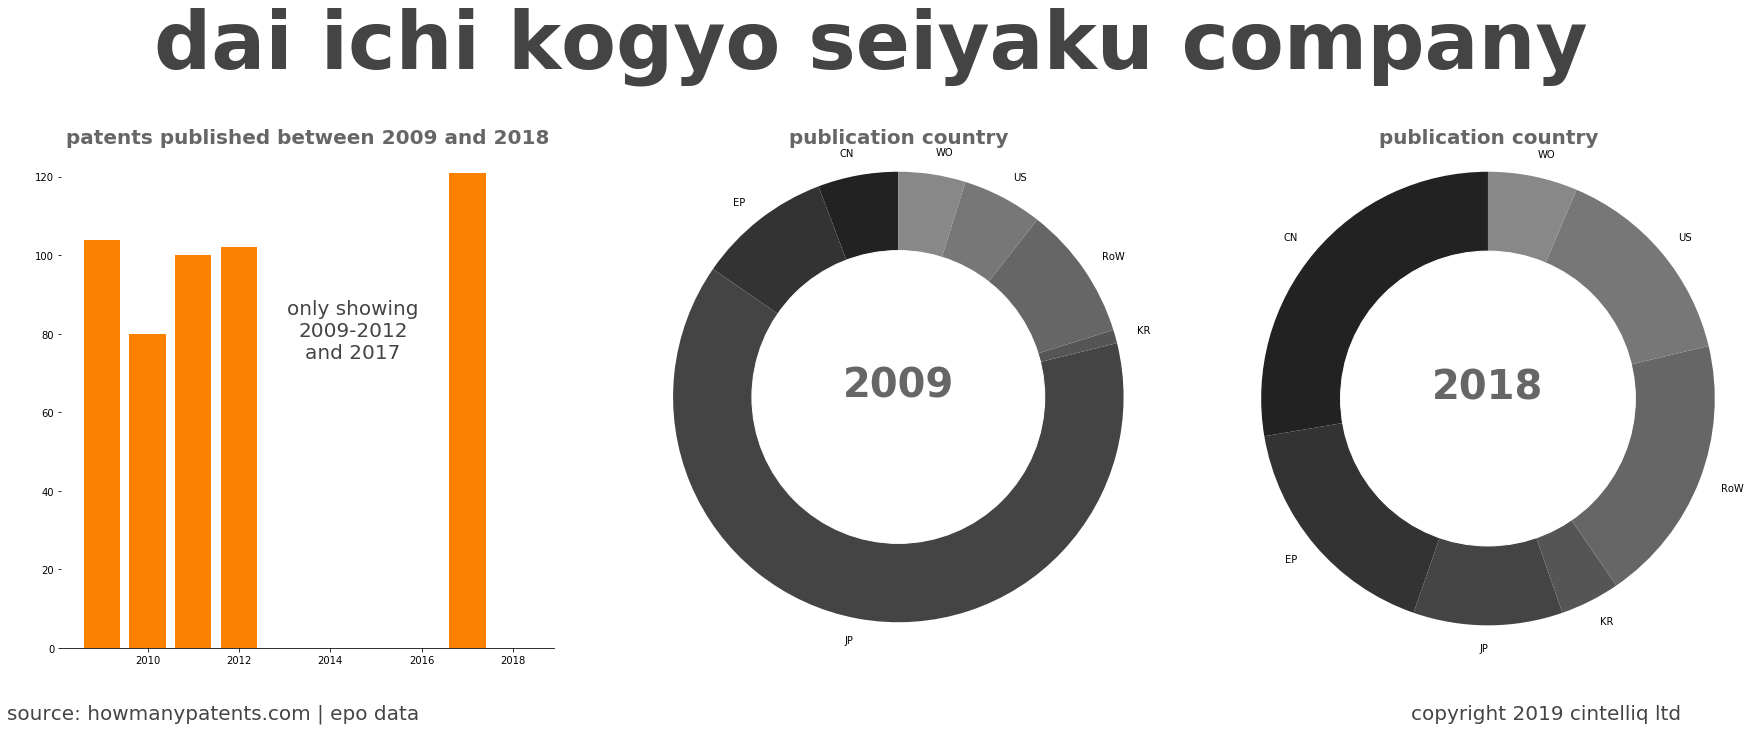 summary of patents for Dai Ichi Kogyo Seiyaku Company